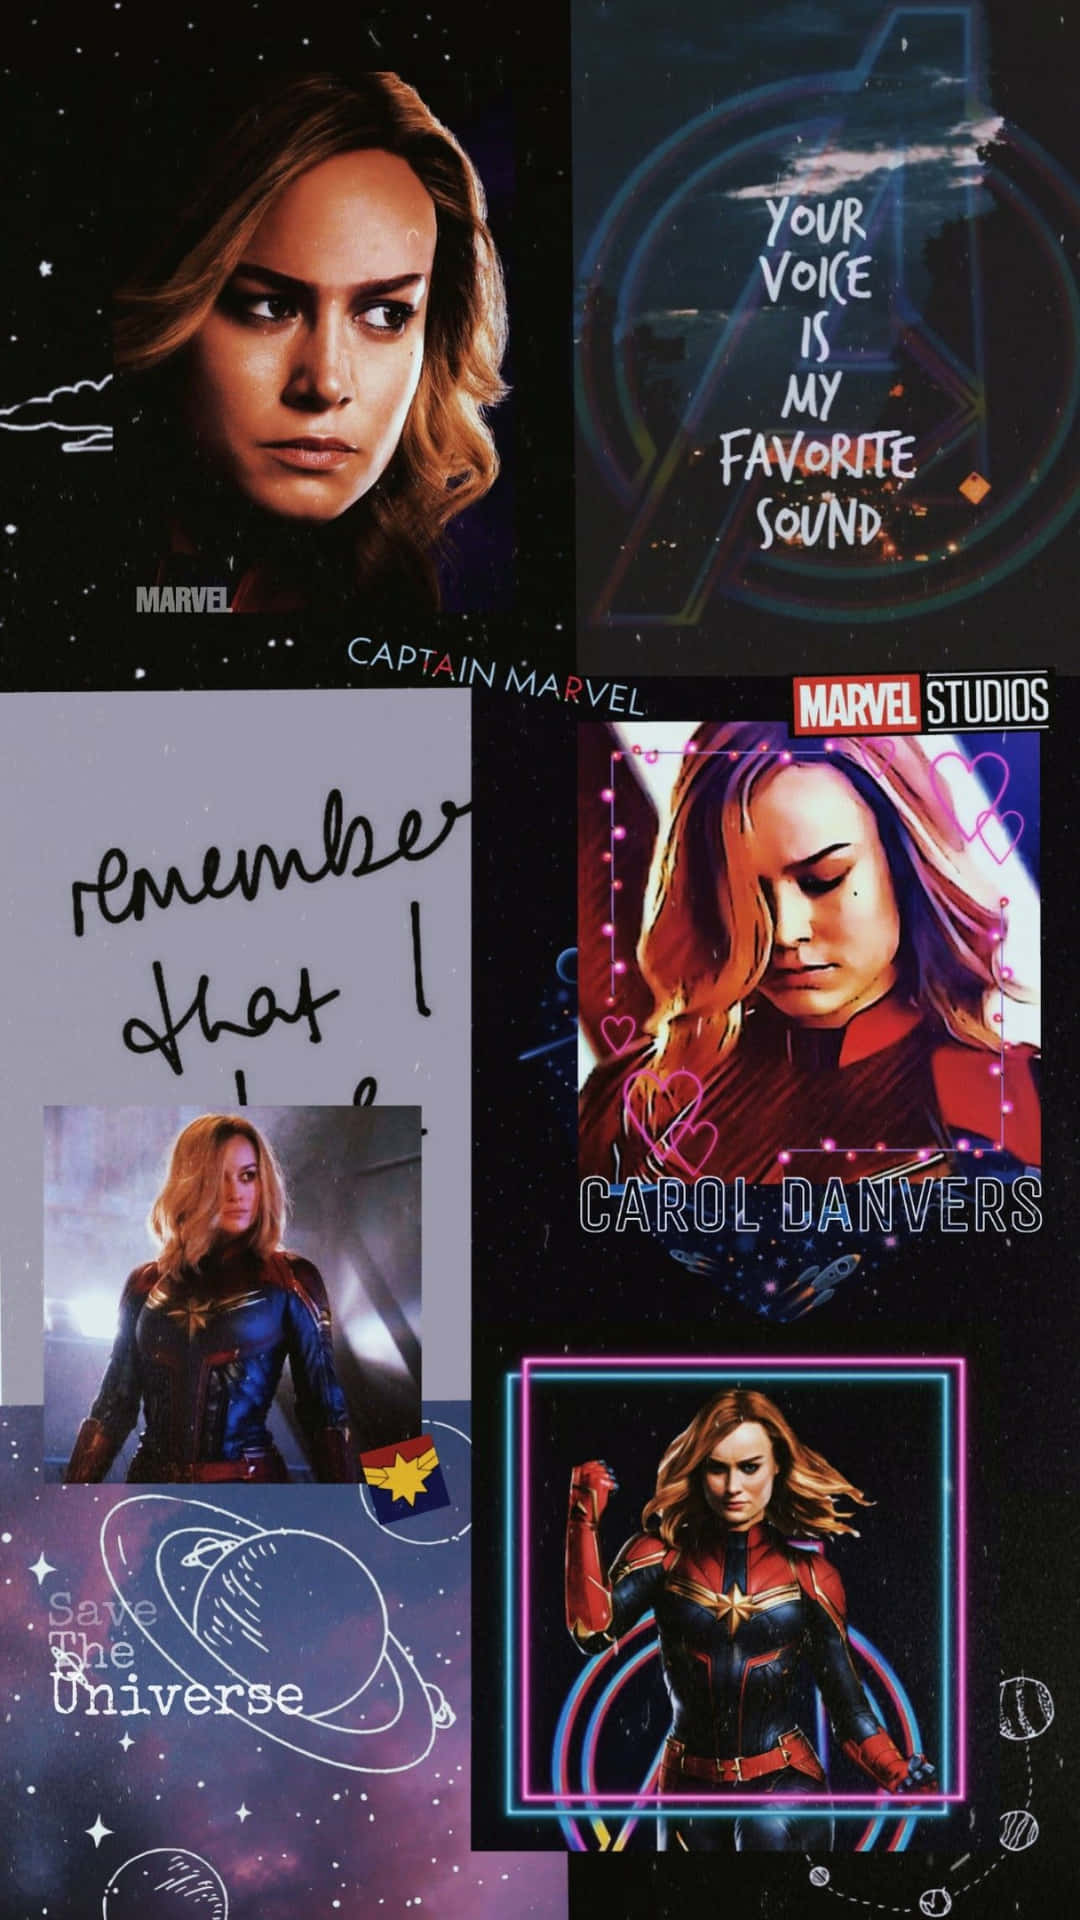 Kaptenmarvel Carol Danvers Collage Wallpaper